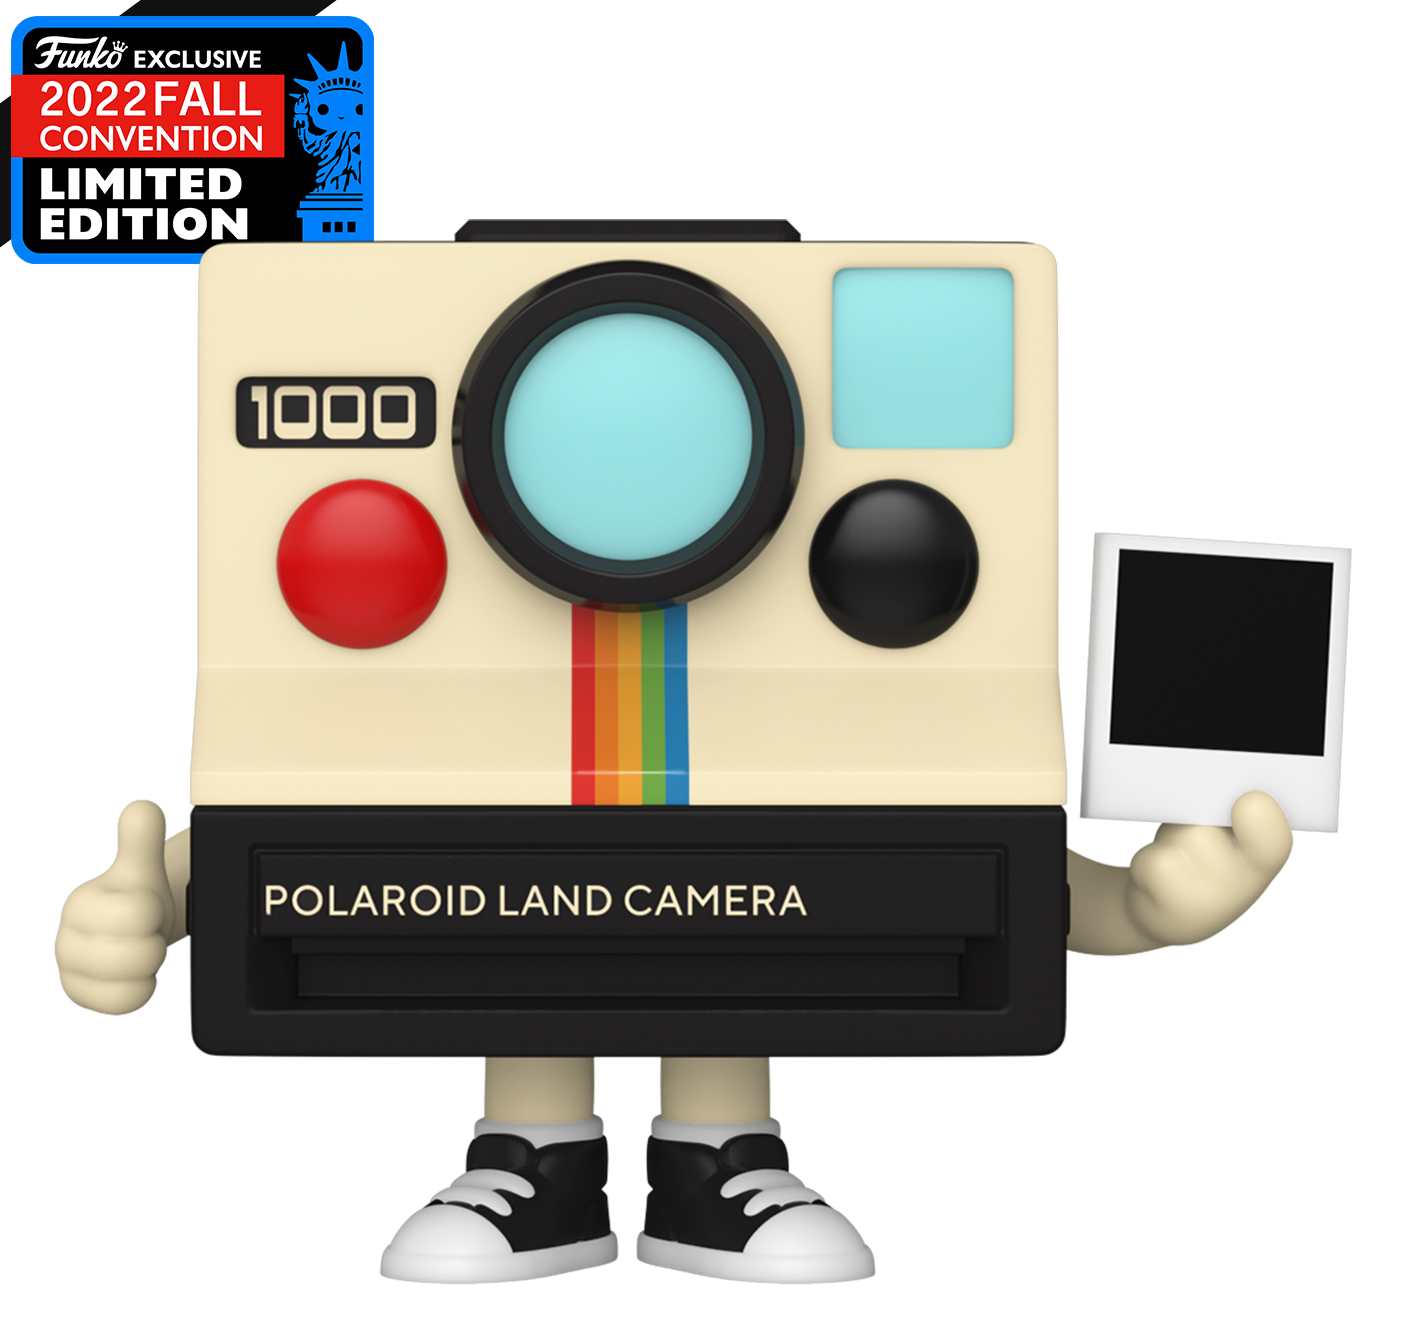 Ad Icons - Polaroid Camera NYCC 2022 Fall Convention Exclusive Pop! Vinyl